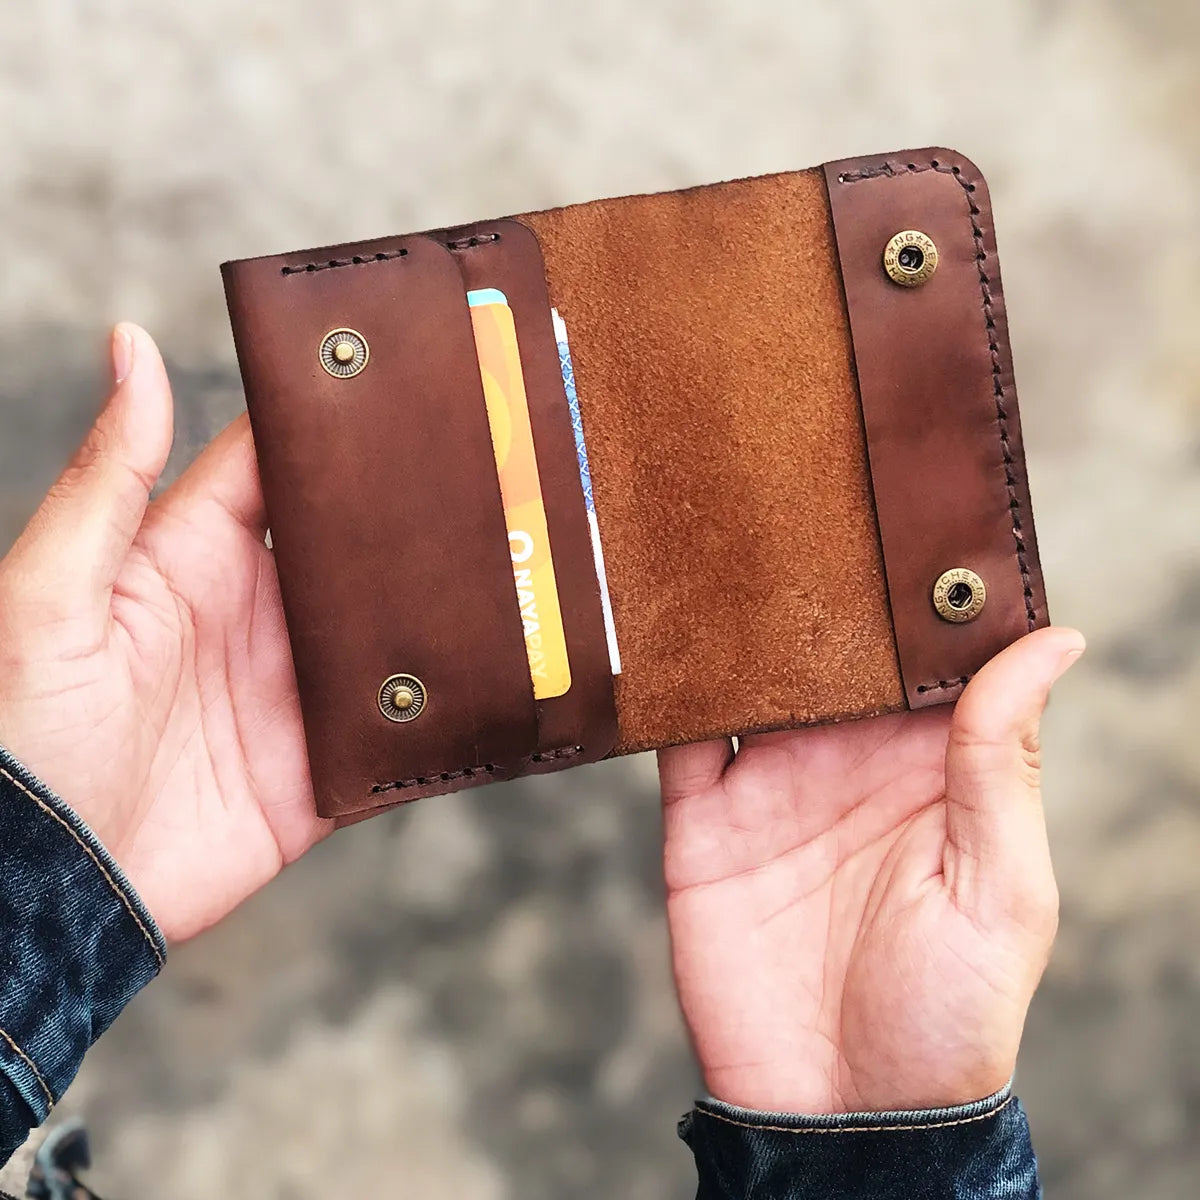 The Next-Gen: A Modern Leather Wallet